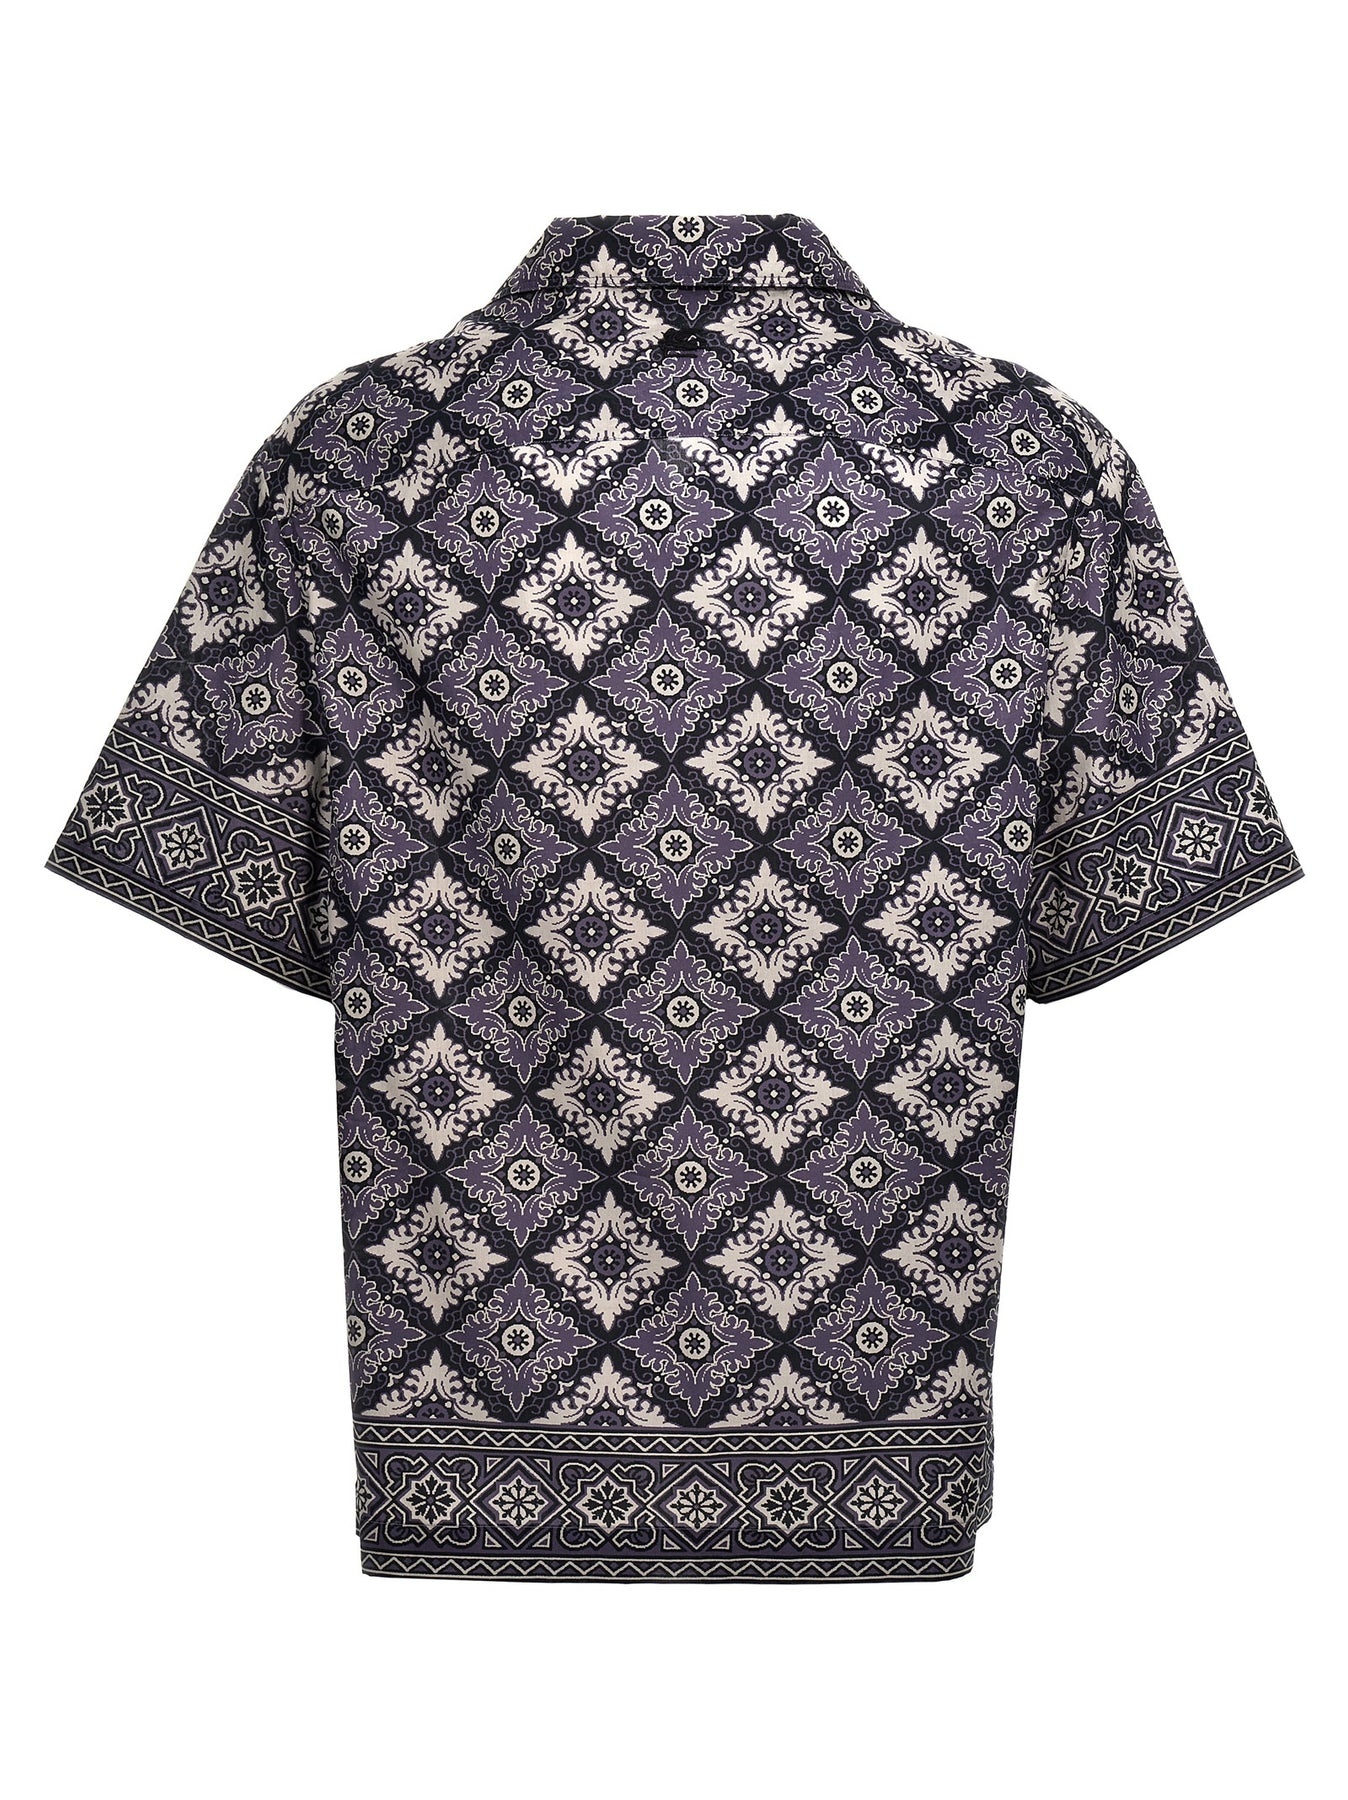 Medaglioni Shirt, Blouse Multicolor - 2